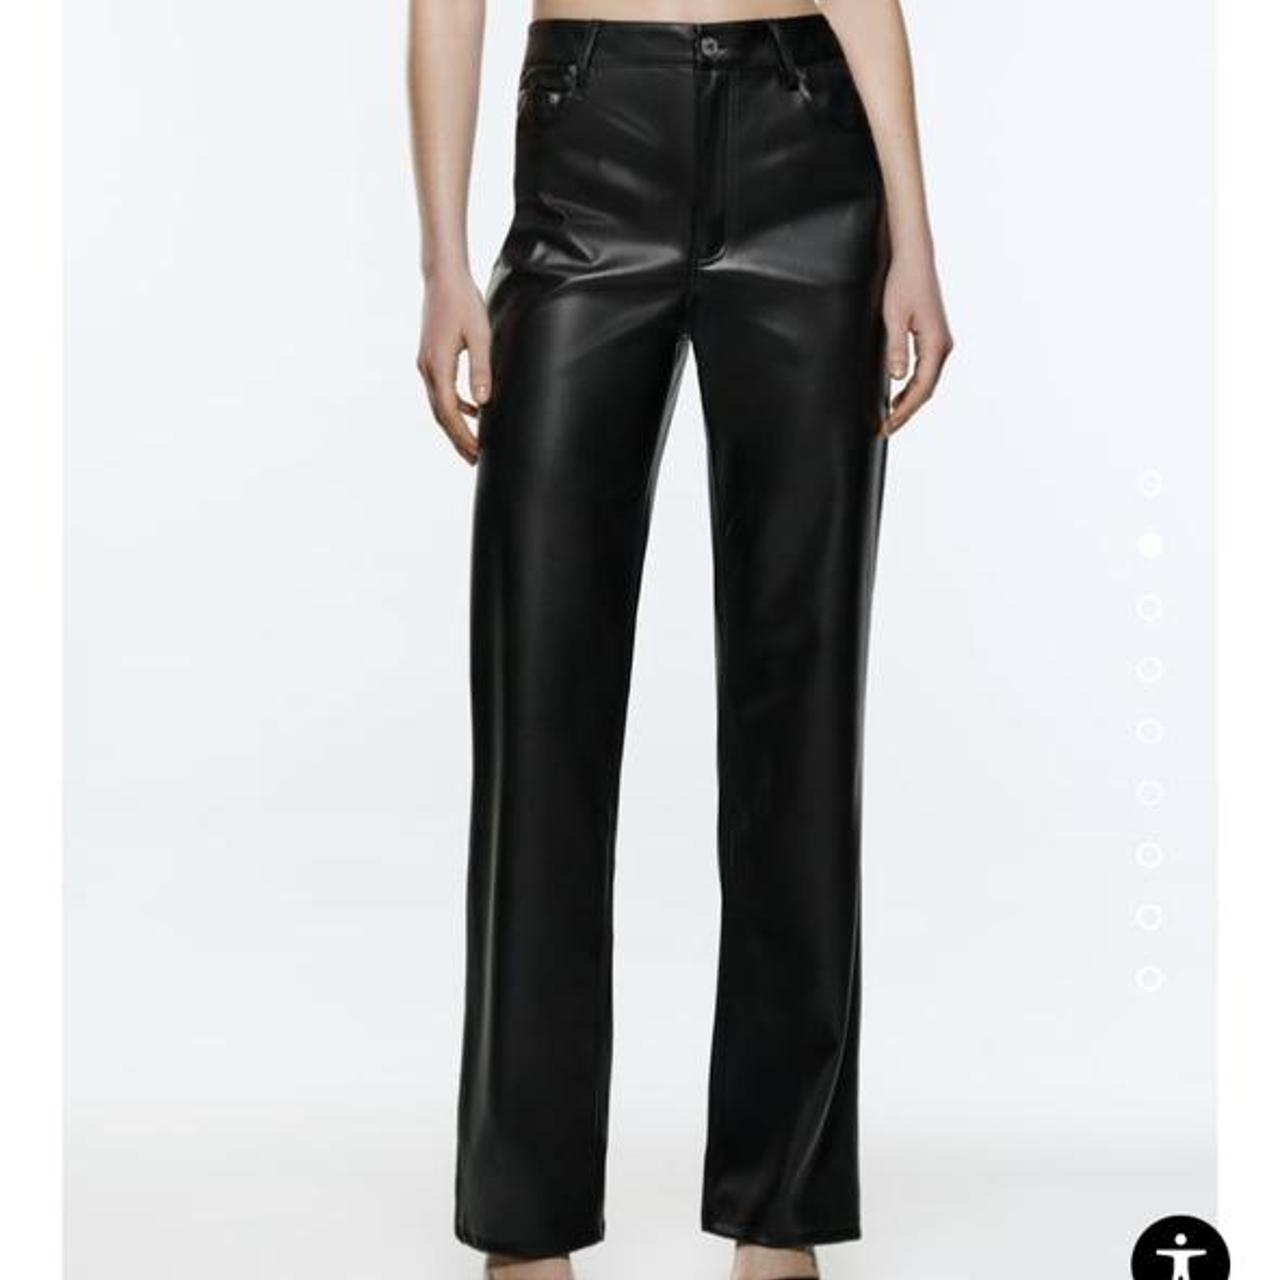 Zara faux leather 90s straight leg trousers size 34,... - Depop